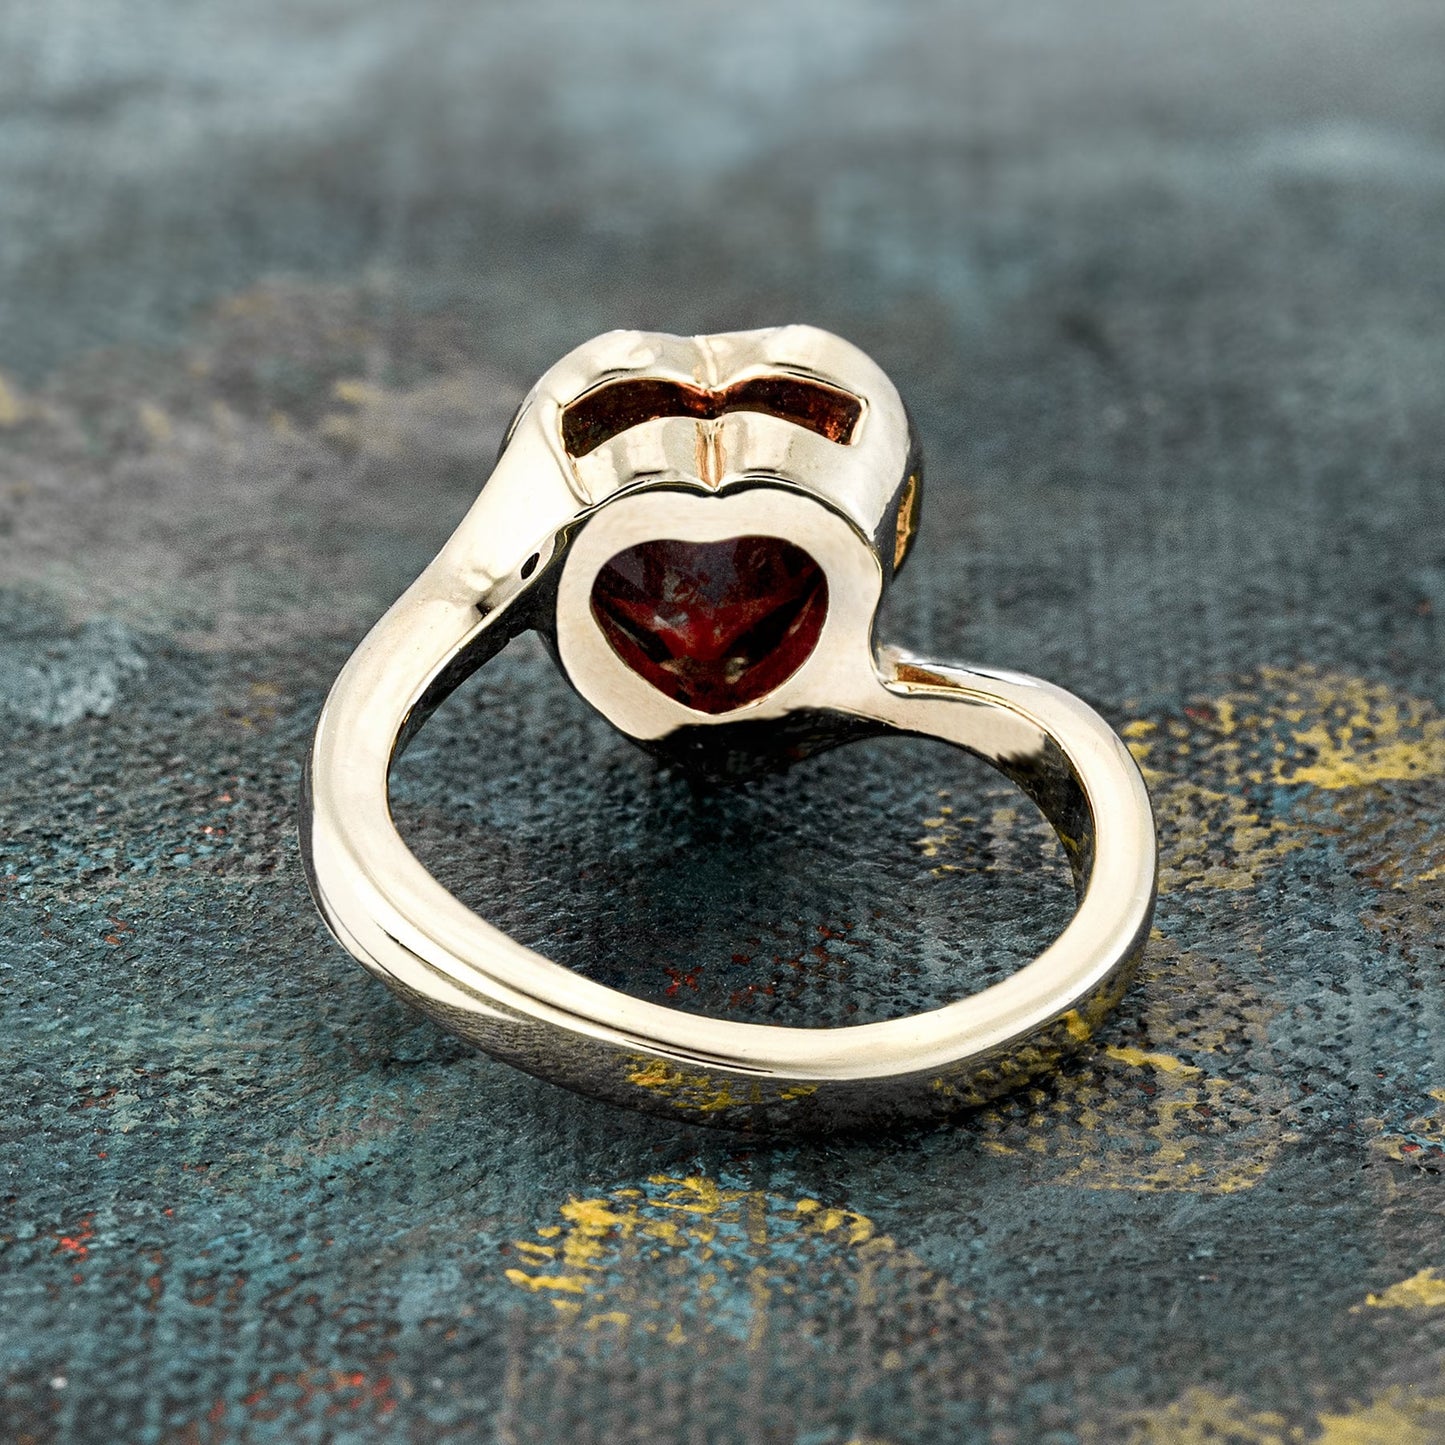 Vintage Ring 1970s Heart Shape Ring with Garnet Swarovski Crystal 18k Gold  #R1400 - Limited Stock - Never Worn